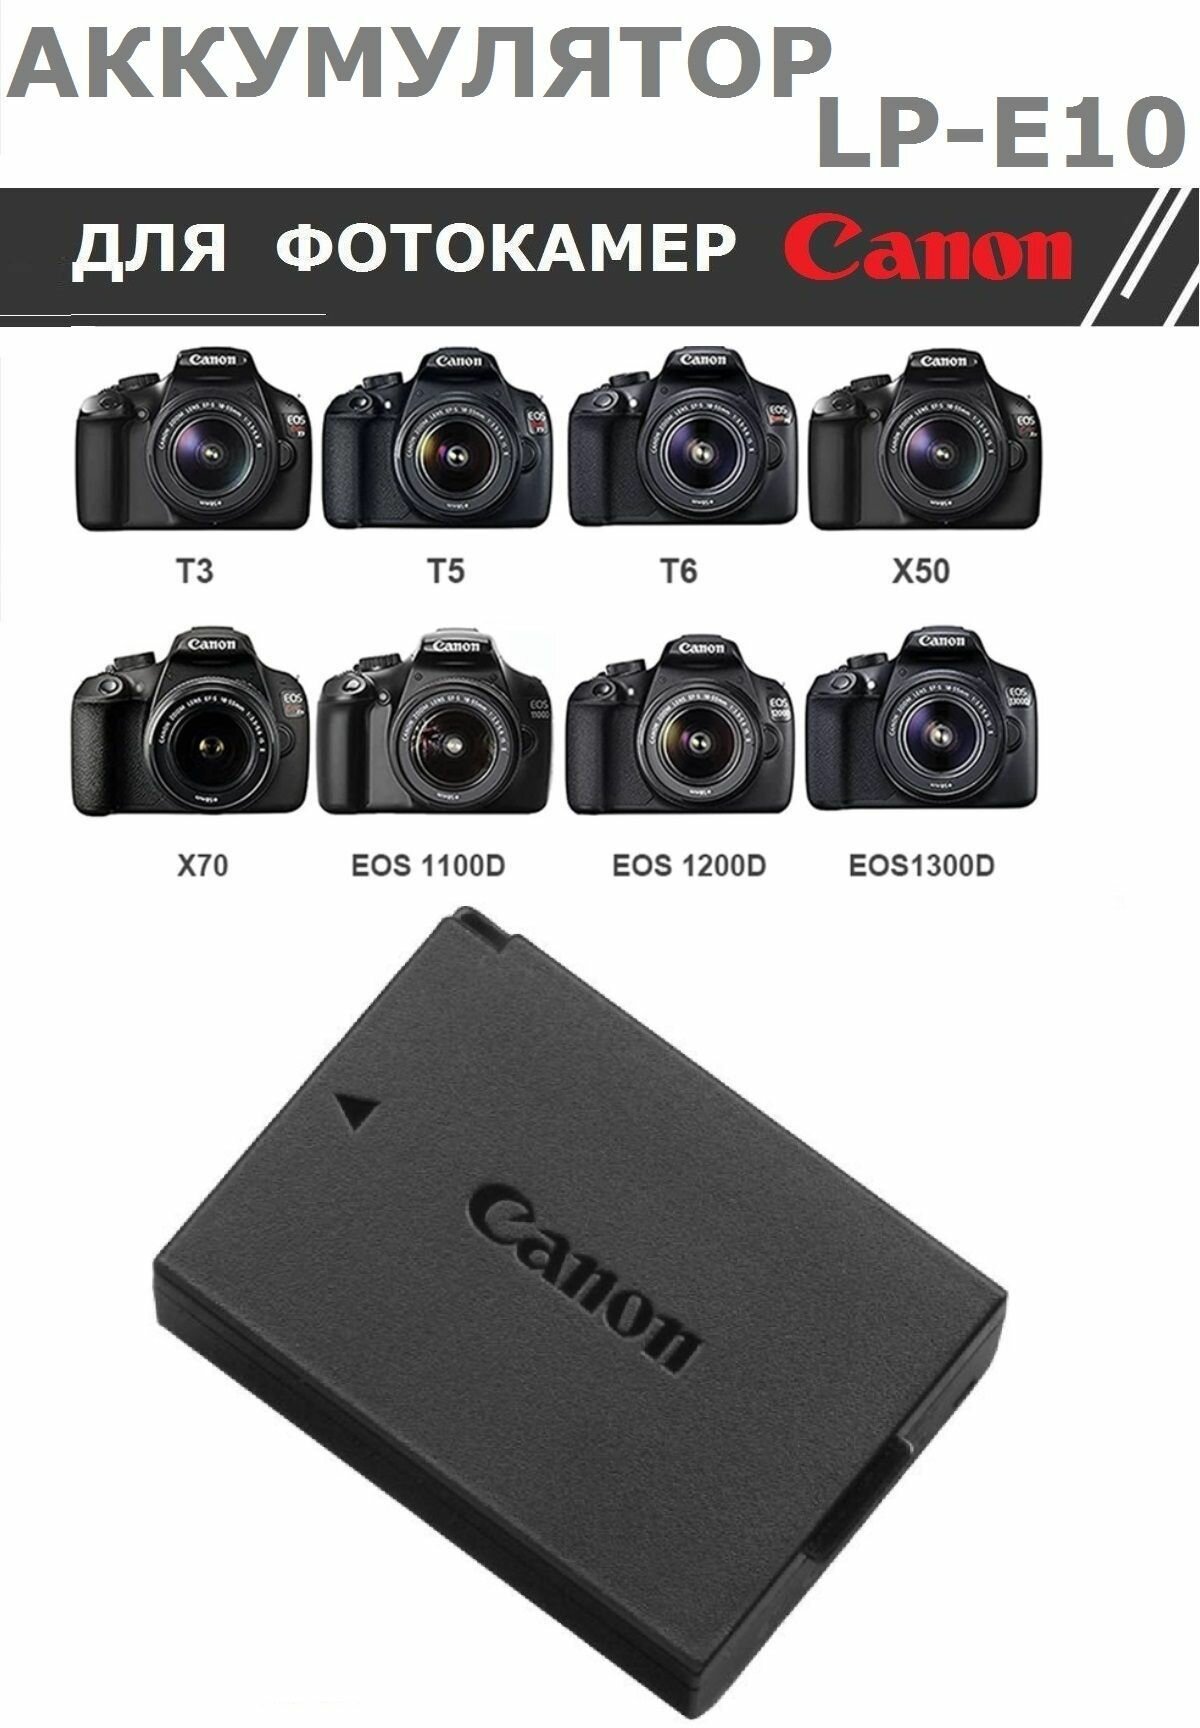 Аккумулятор LP-E10 для Canon EOS 1100D Kiss X50/ EOS 1200D Rebel T5/ EOS 1300D Rebel T6